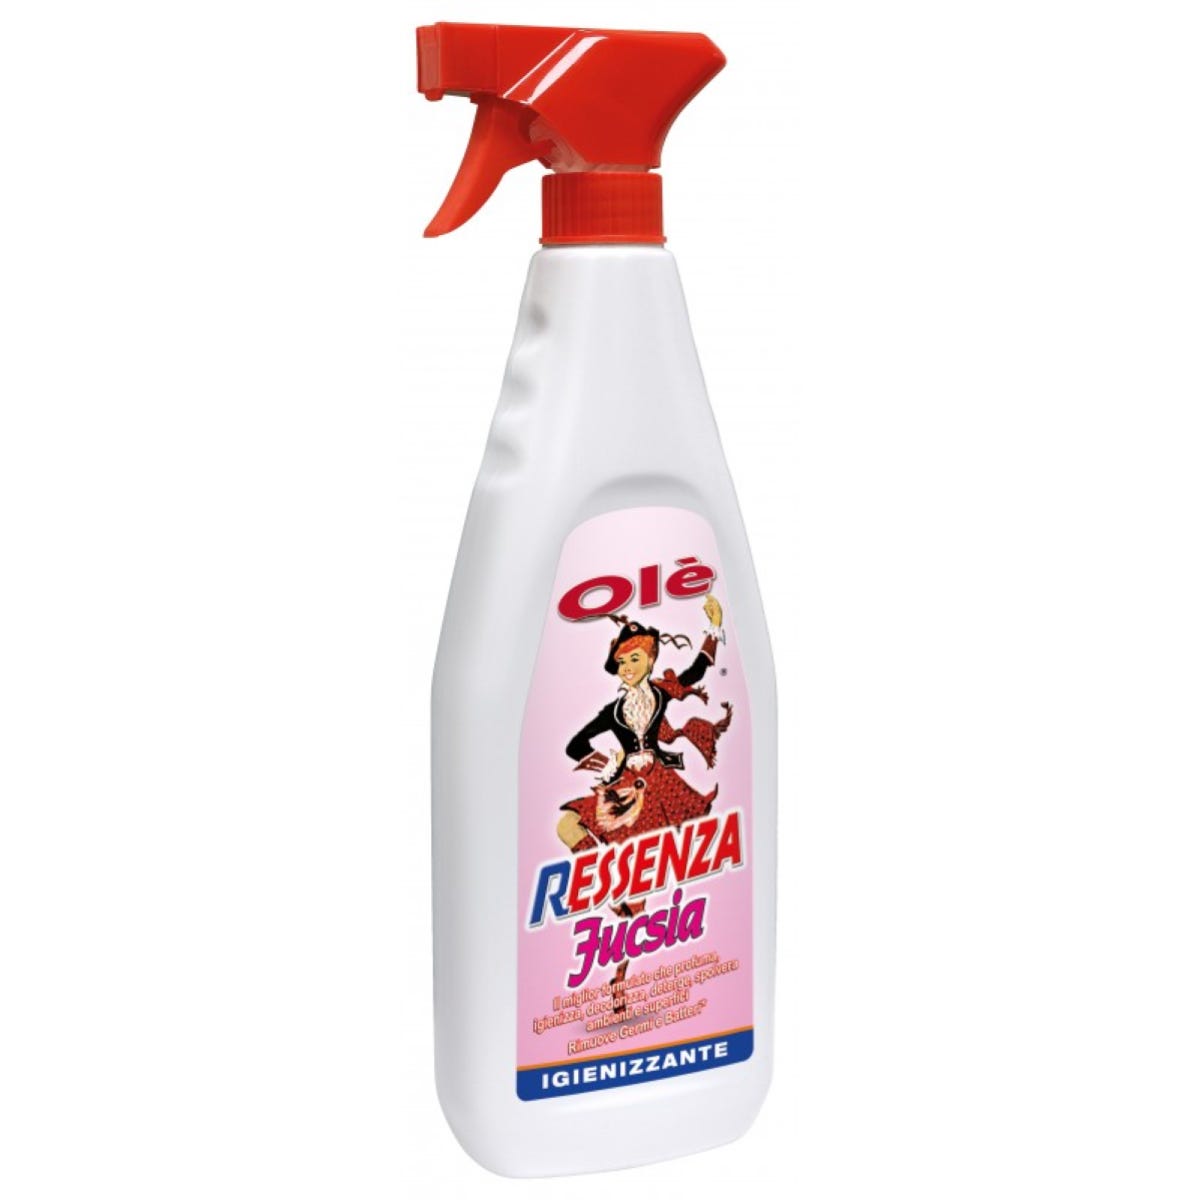 OLÈ RESSENZA profumata ml.750 12 PEZZI igienizzante detergente spray Fucsia